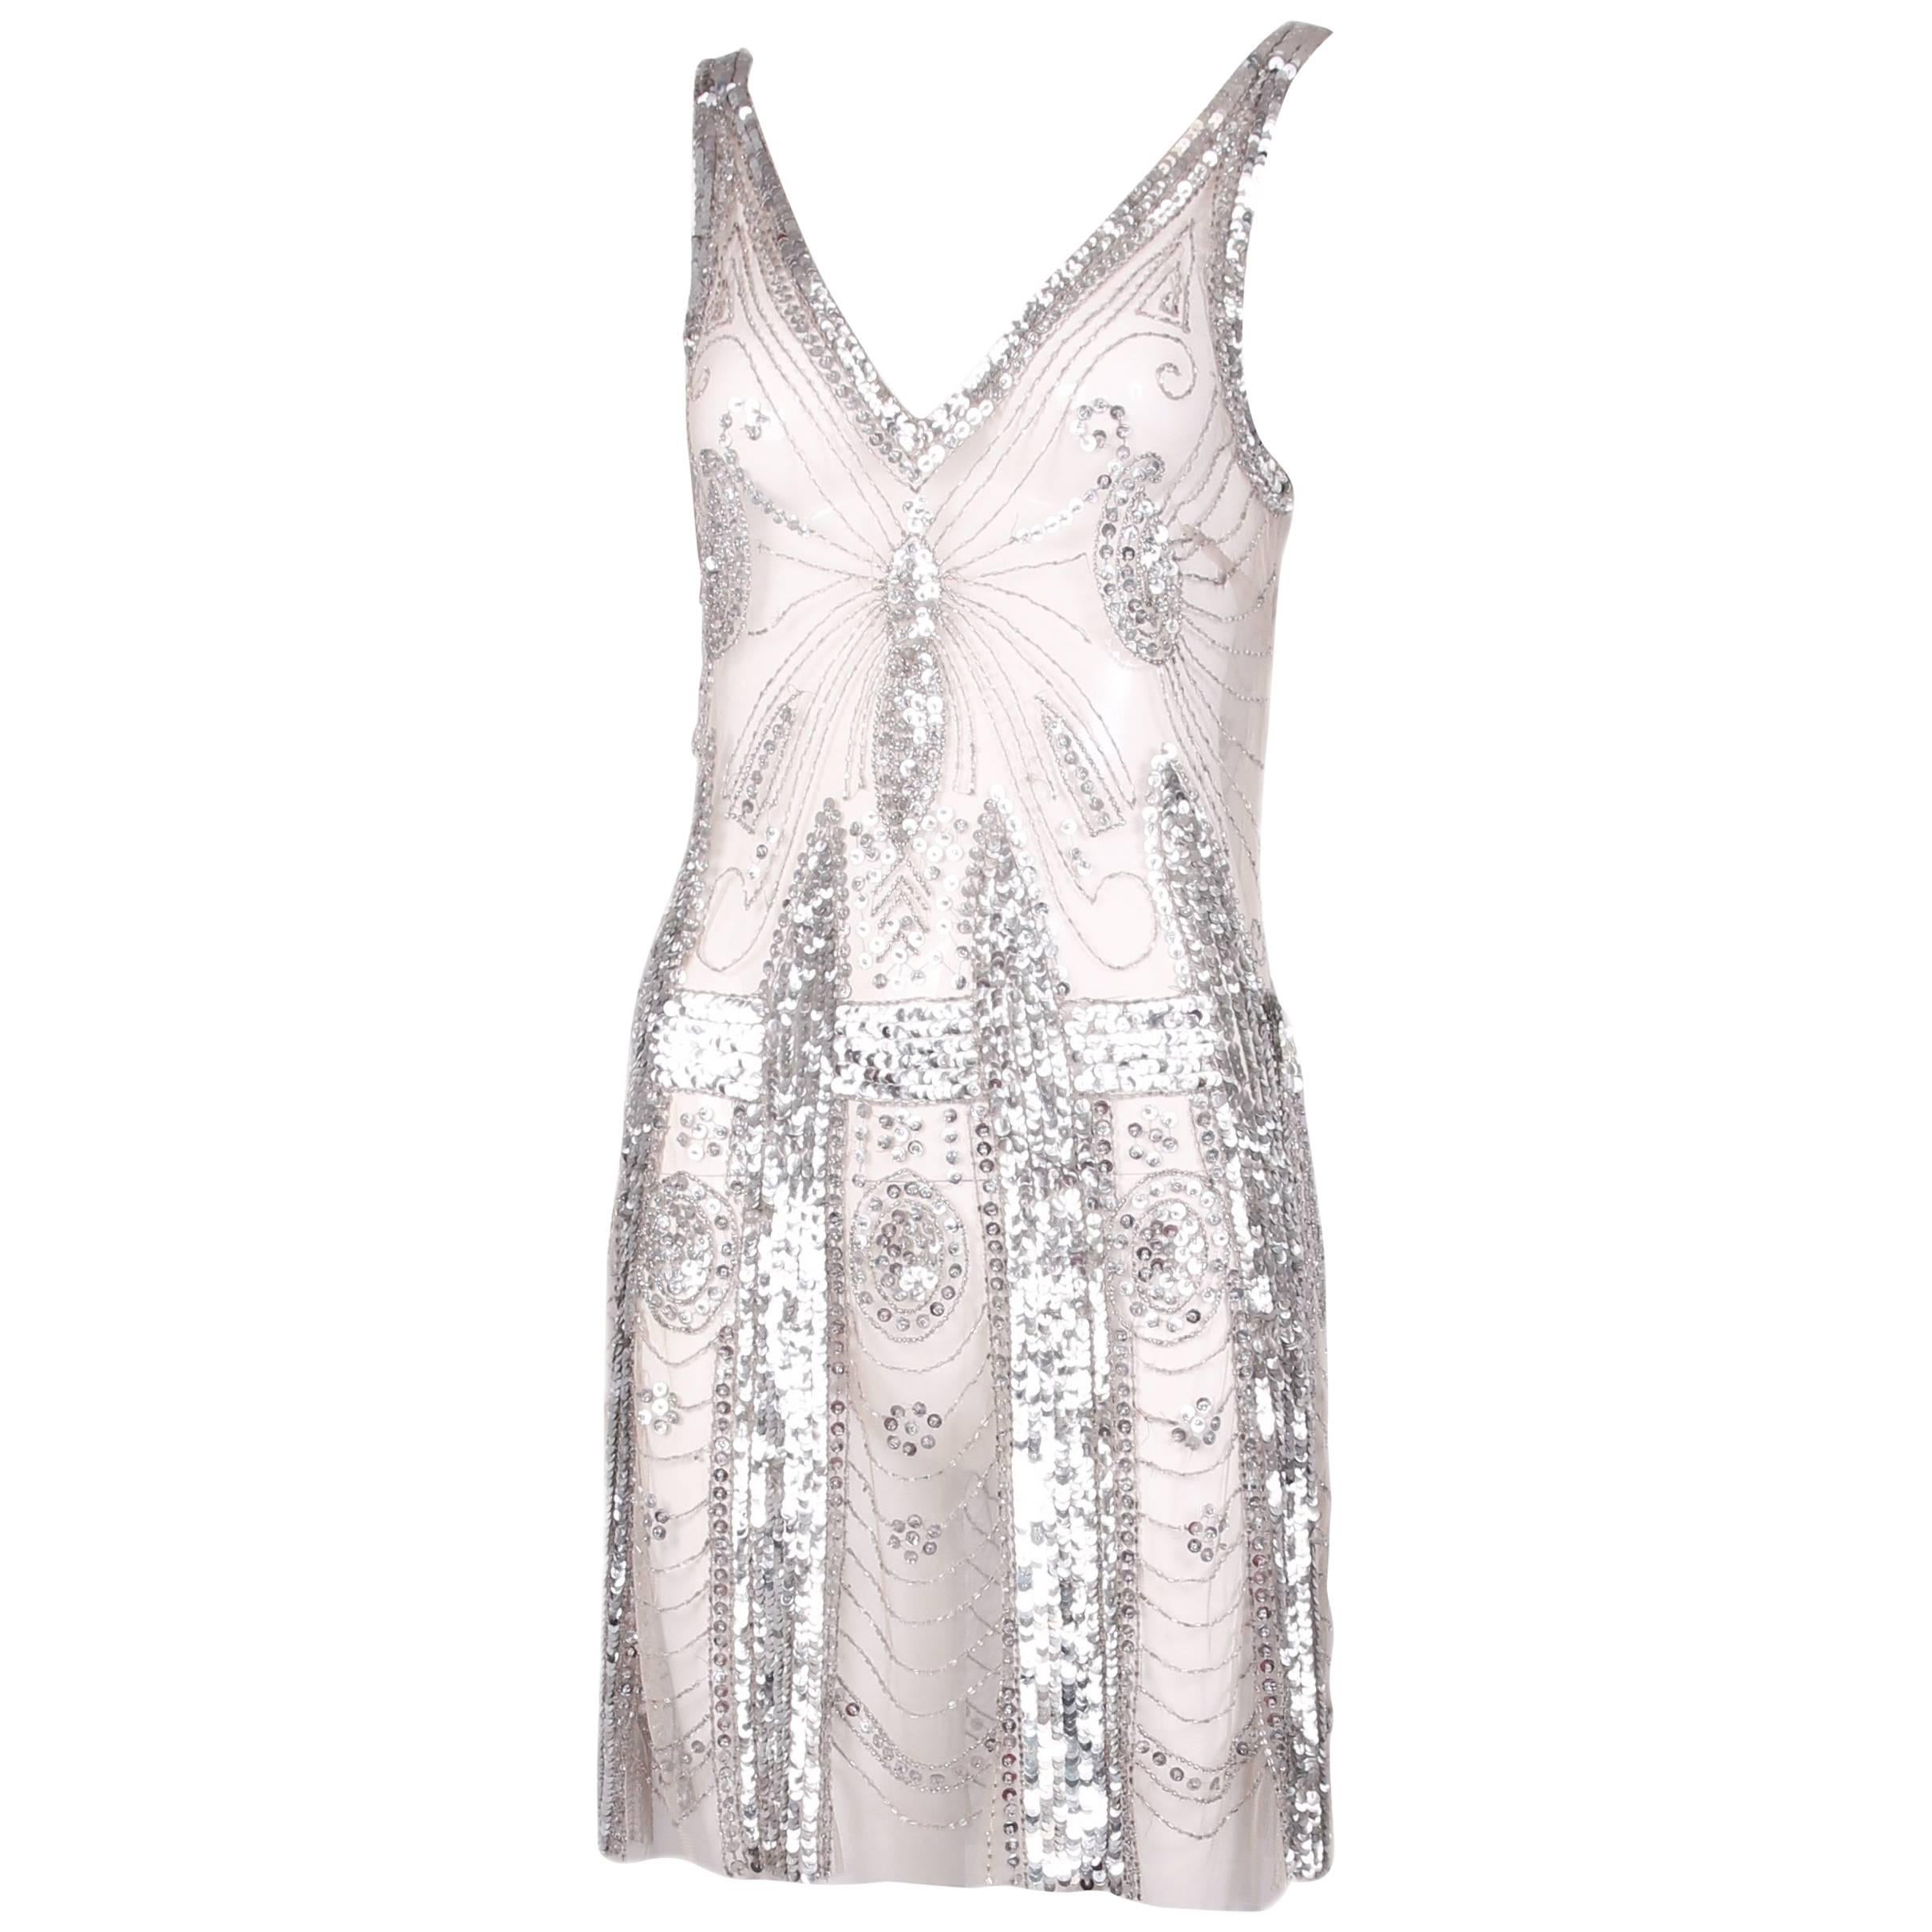 Pierre Balmain Sheer Mini Dress Embellished w/Silver Sequins & Beads